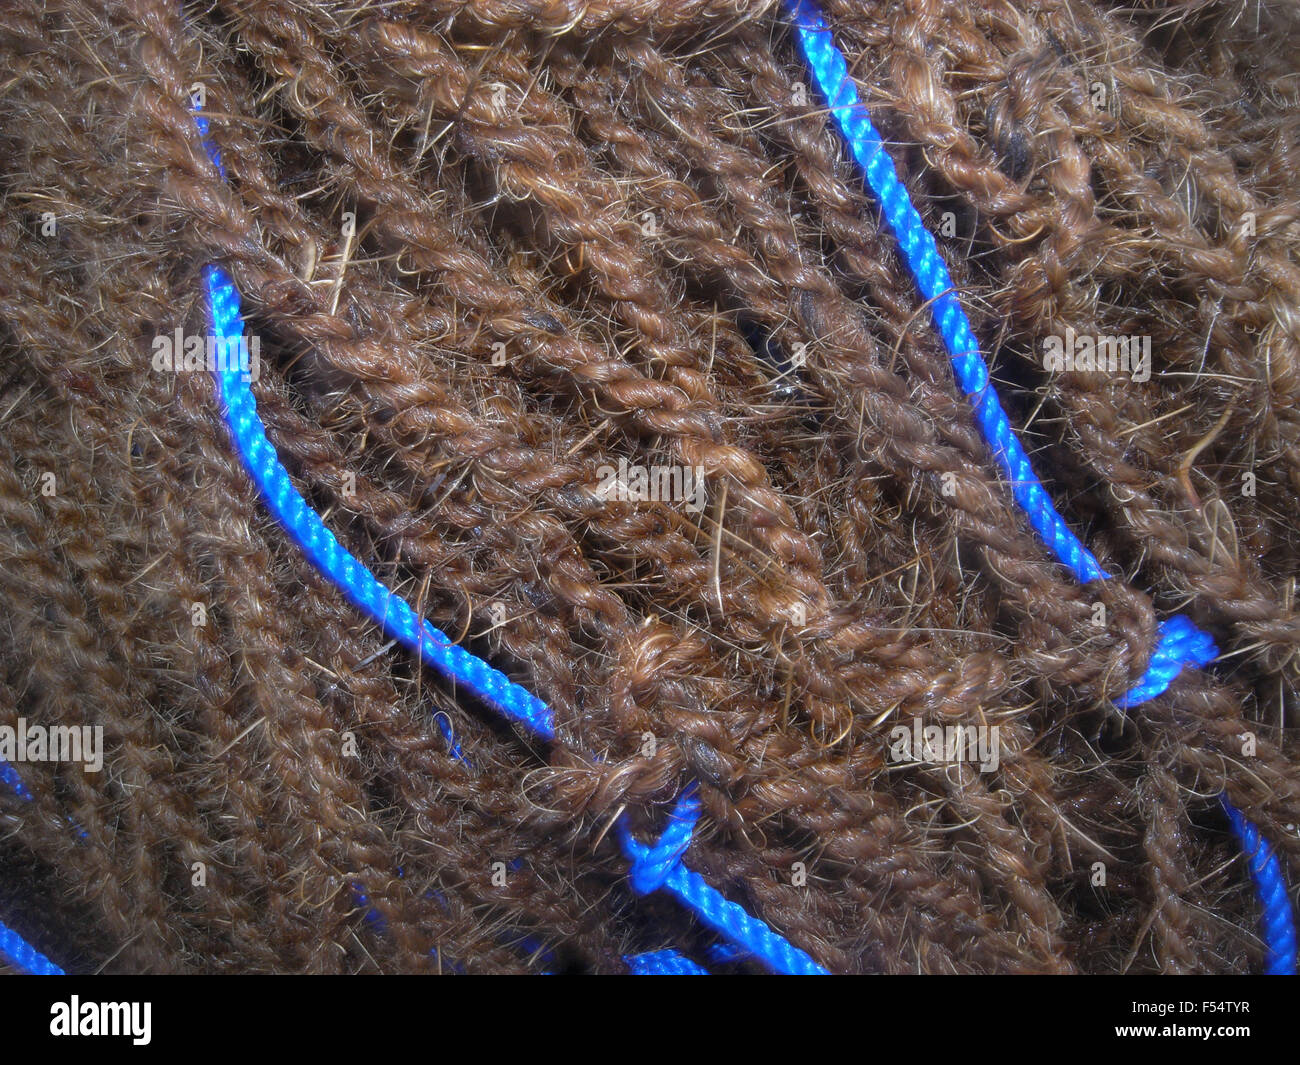 Fishing nets made of traditional (biodegradable) coconut fibre (rather than modern nylon plastic), Galle, Sri Lanka Stock Photo